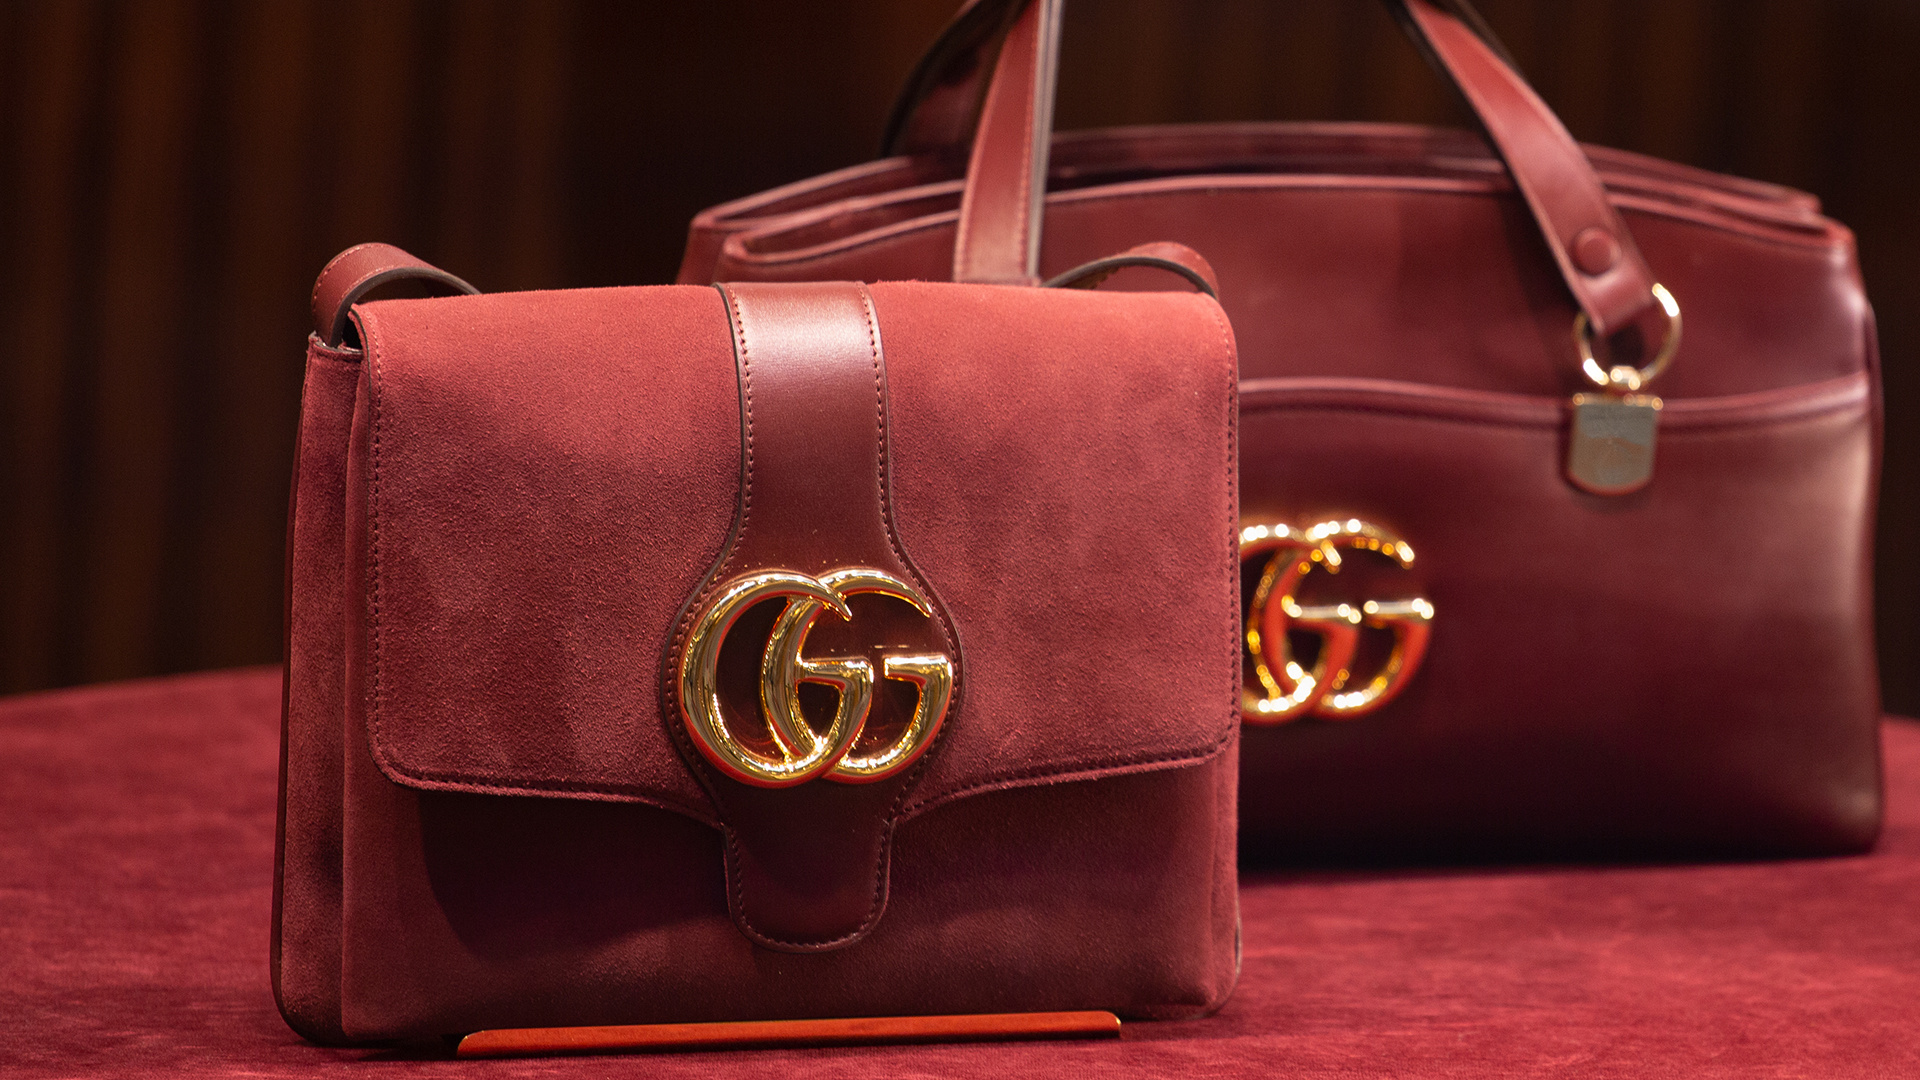 Gucci: A handbag, The world-class luxury, Italian heritage, Modern style. 1920x1080 Full HD Wallpaper.